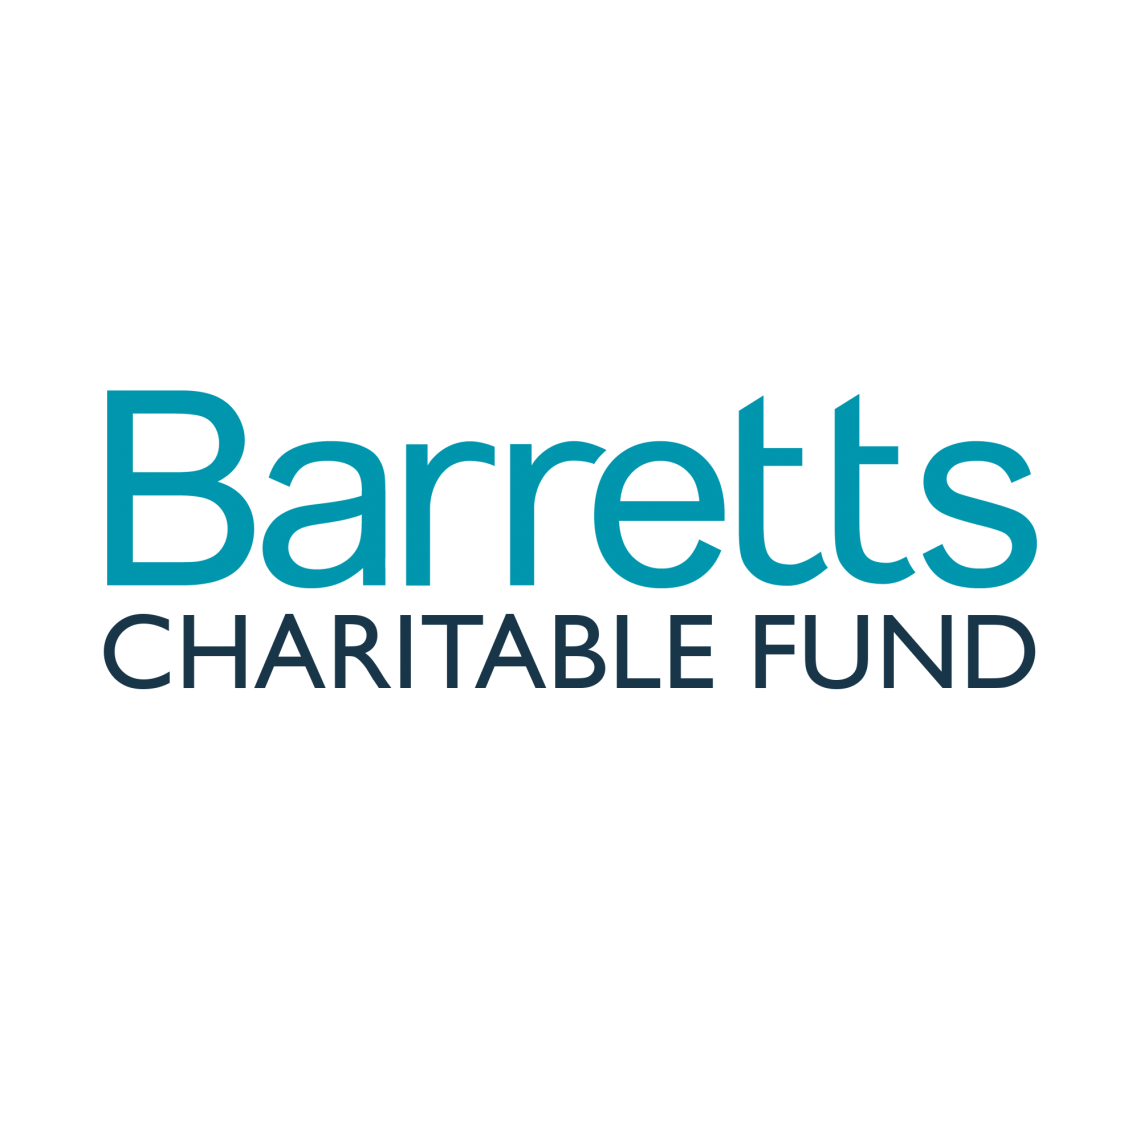 Barretts charitable fund logo